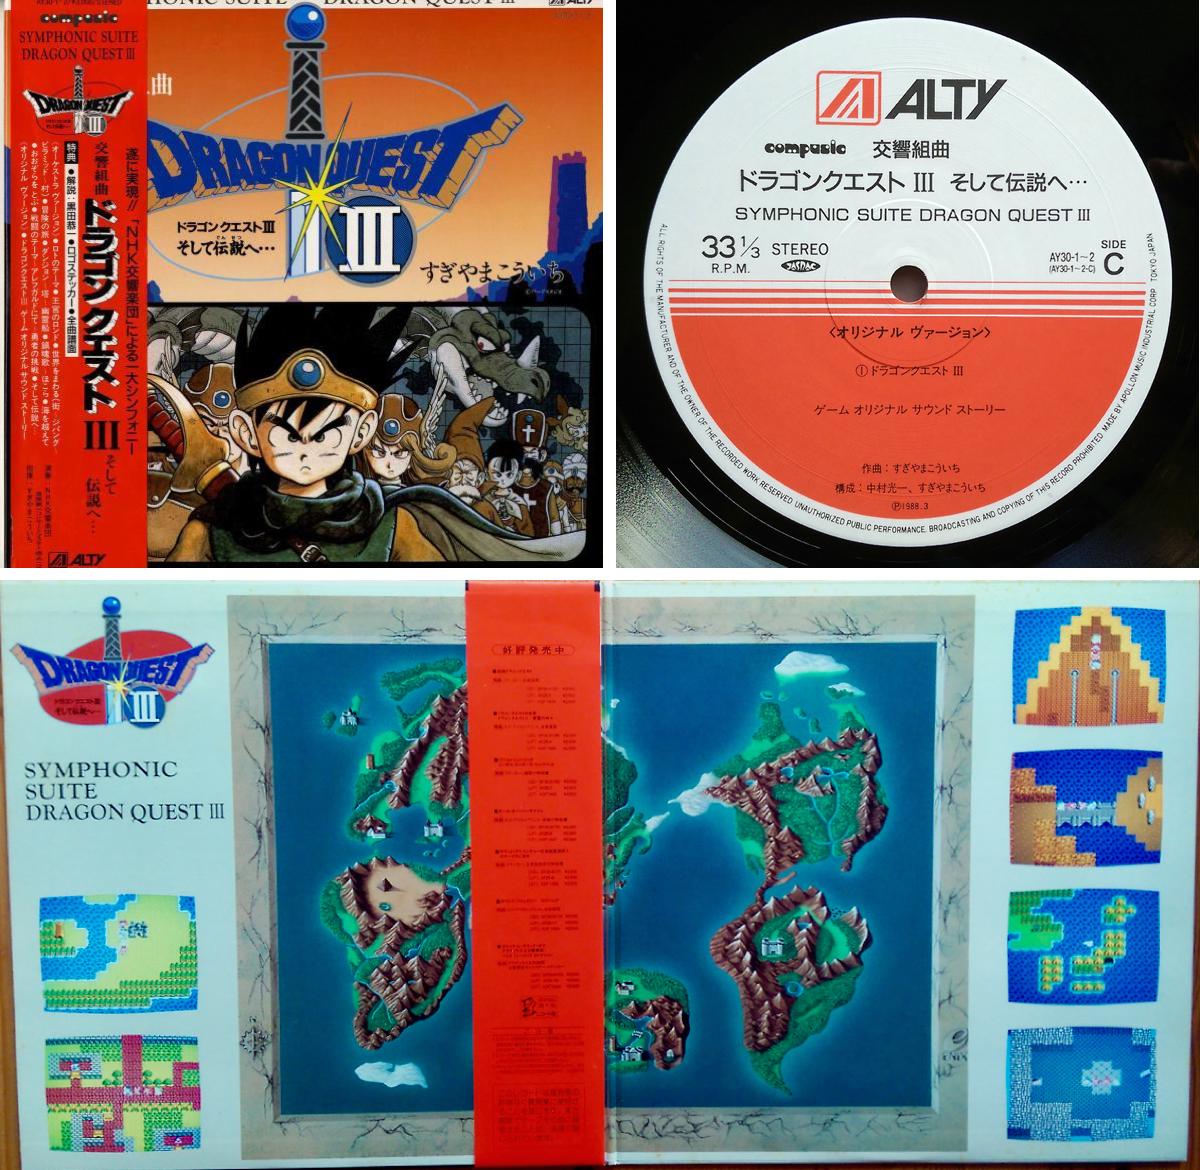 Symphonic Suite Dragon Quest III vinyl